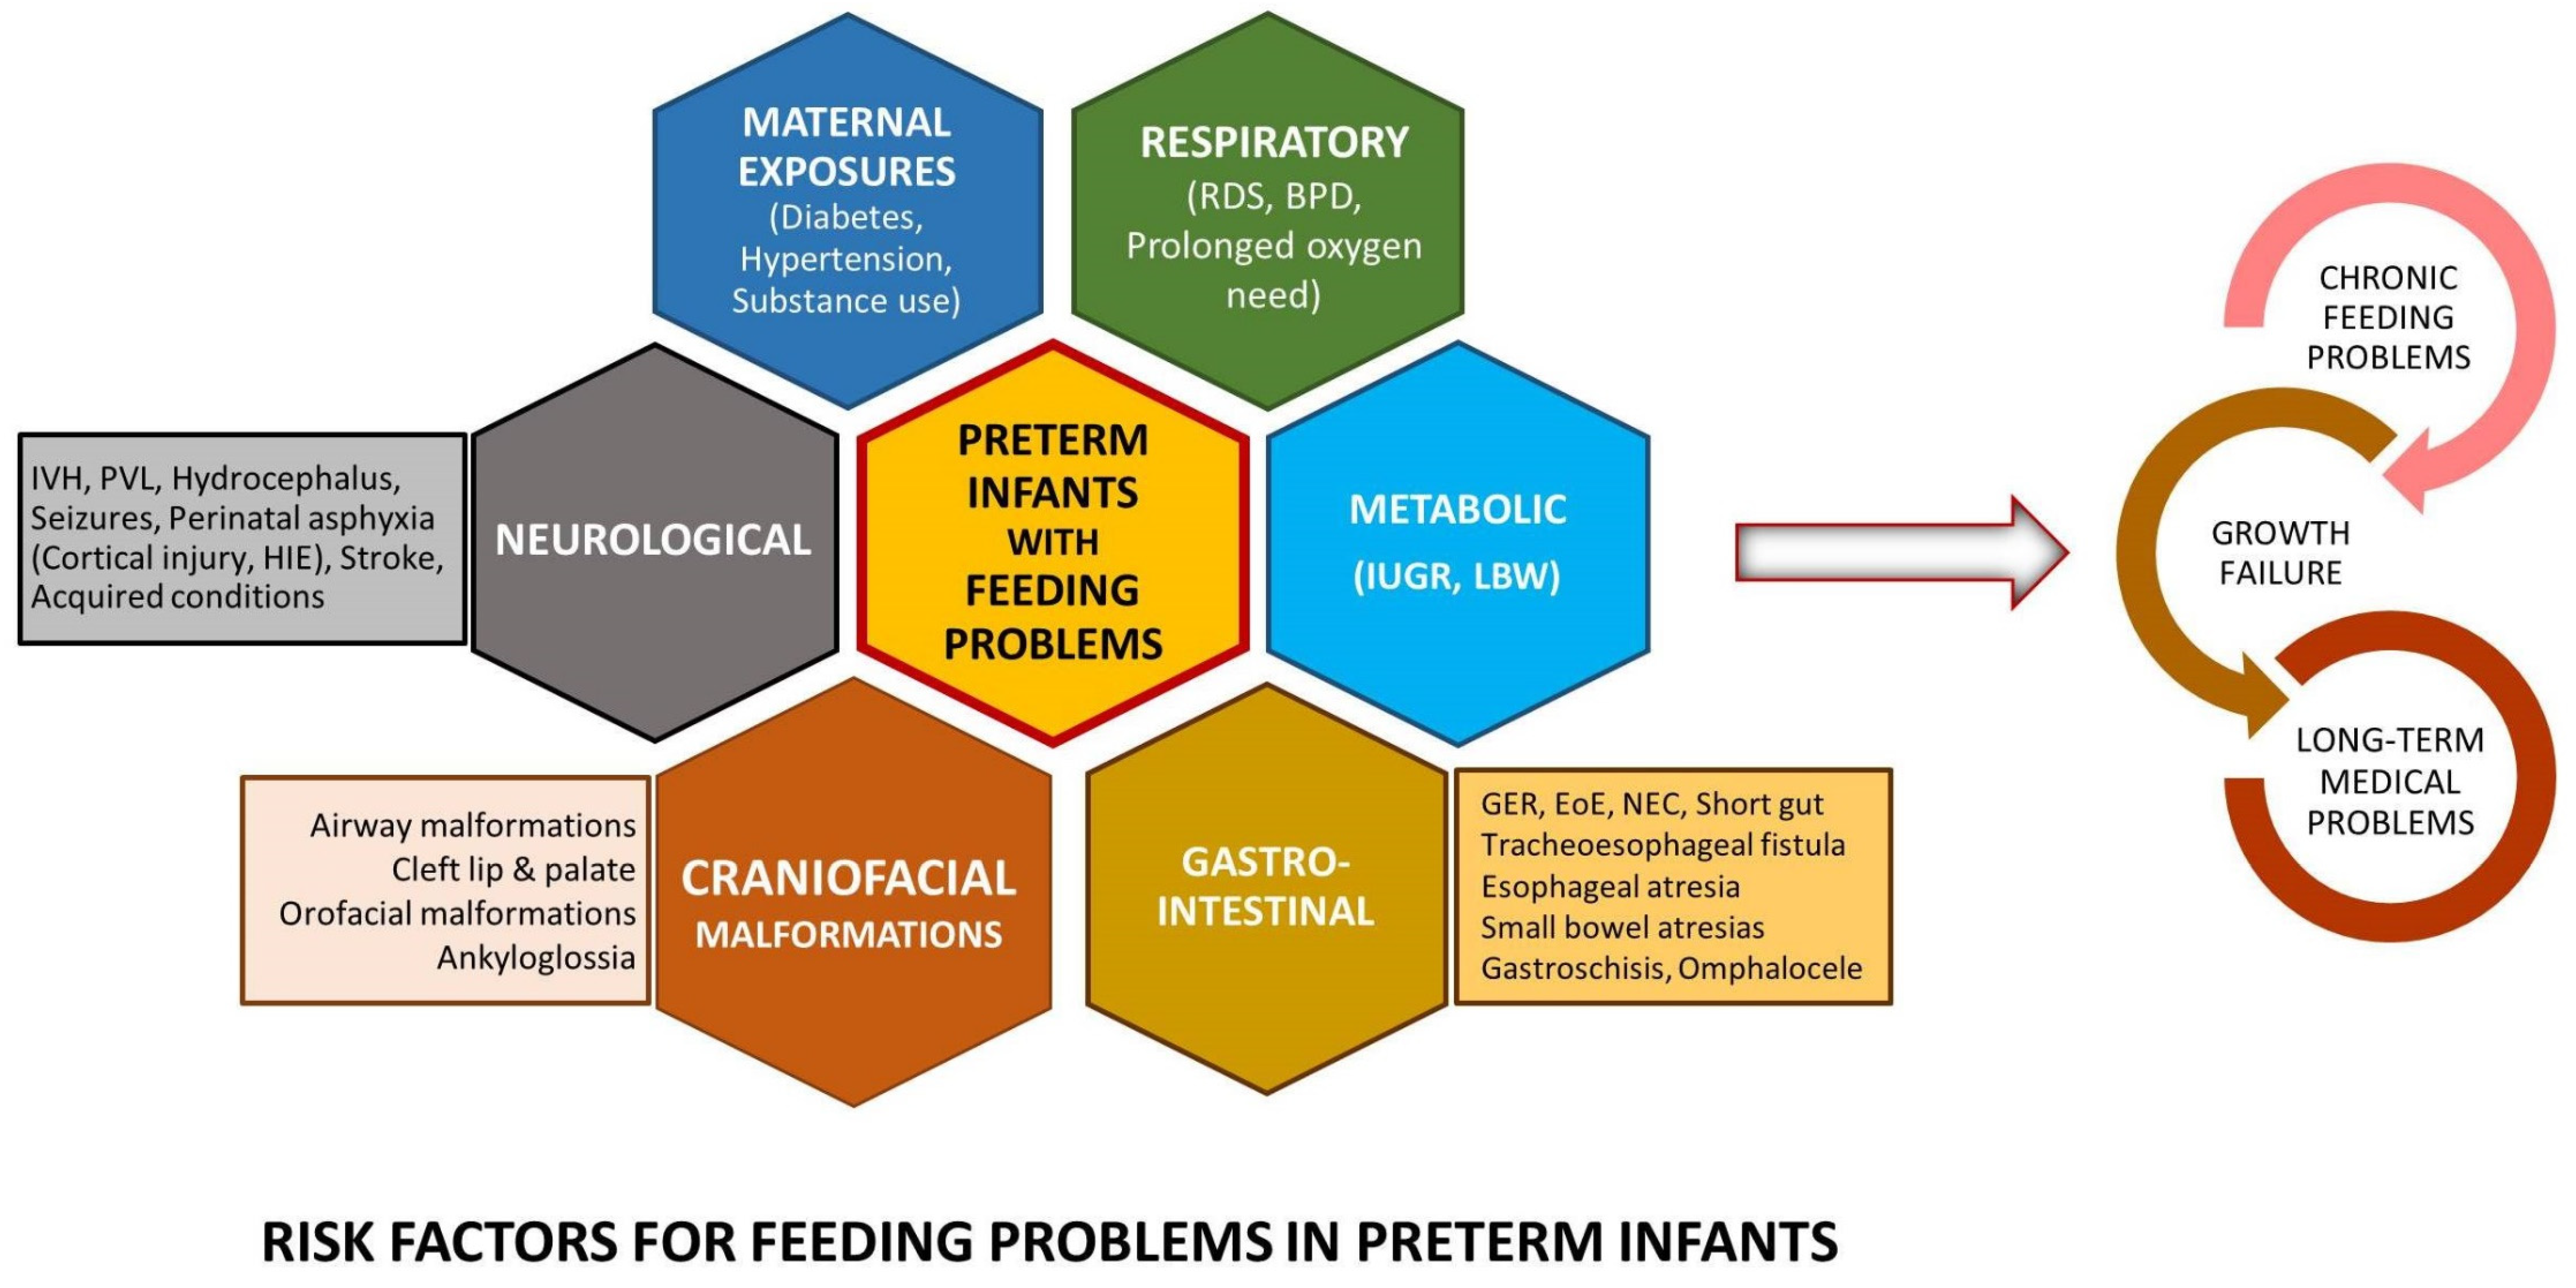 Micro Preemie Survival Rates and Health Concerns